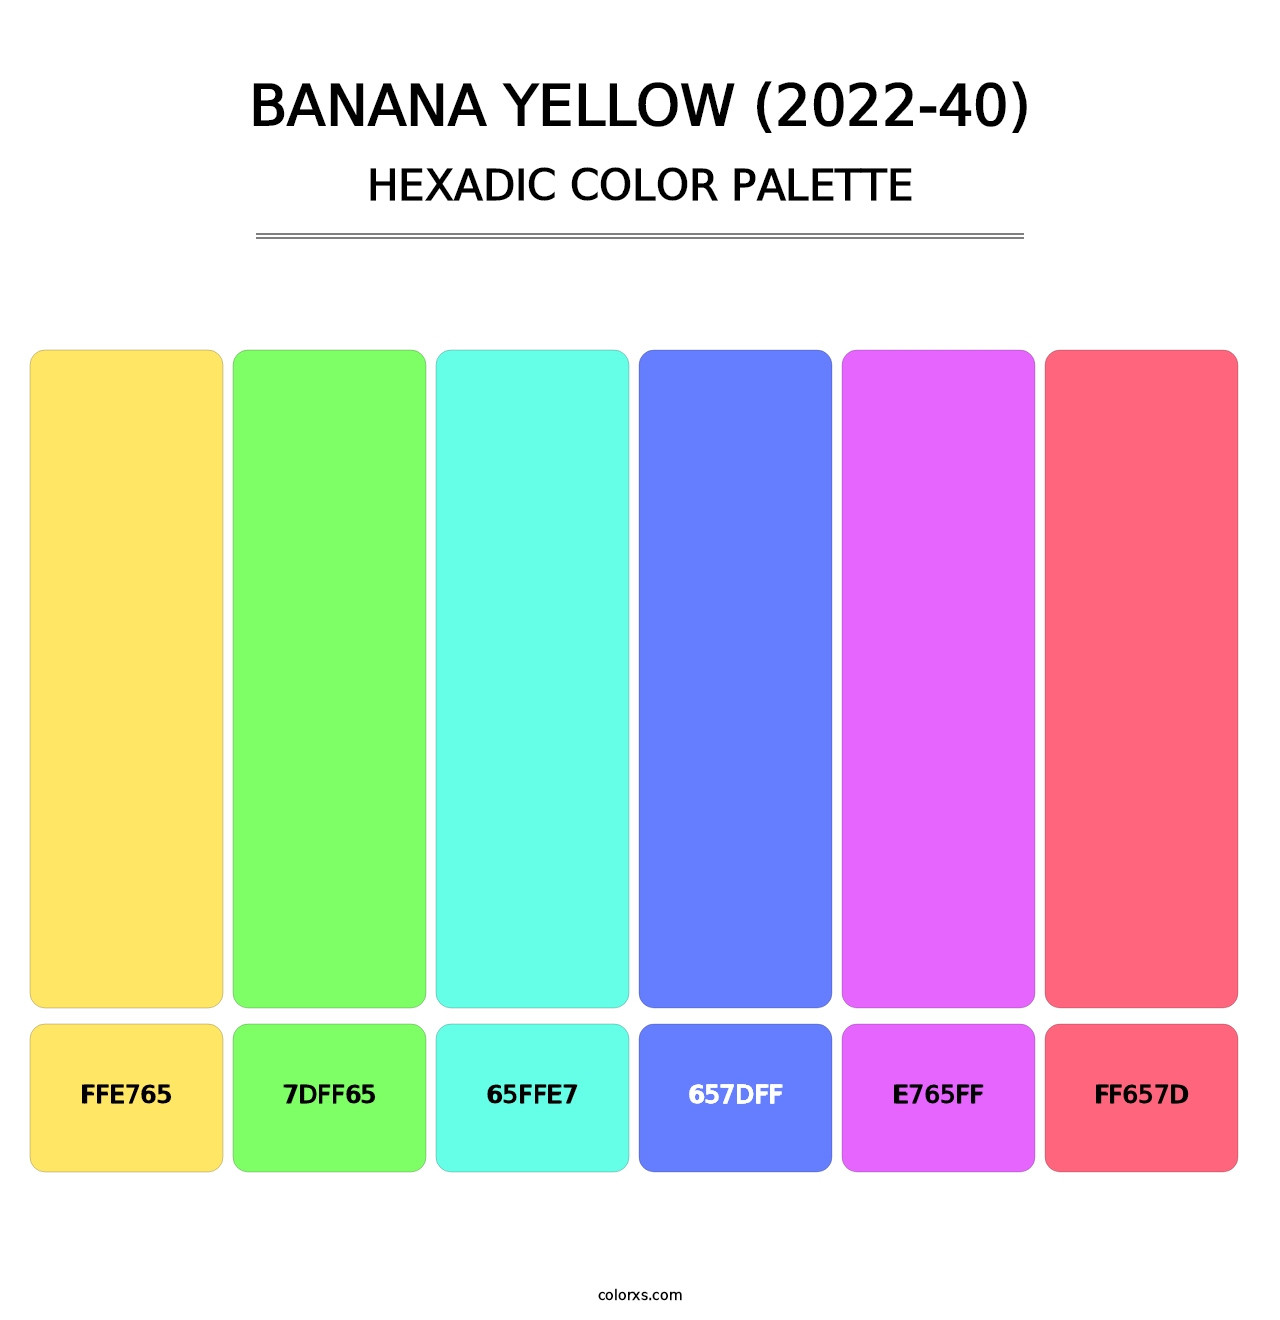 Banana Yellow (2022-40) - Hexadic Color Palette